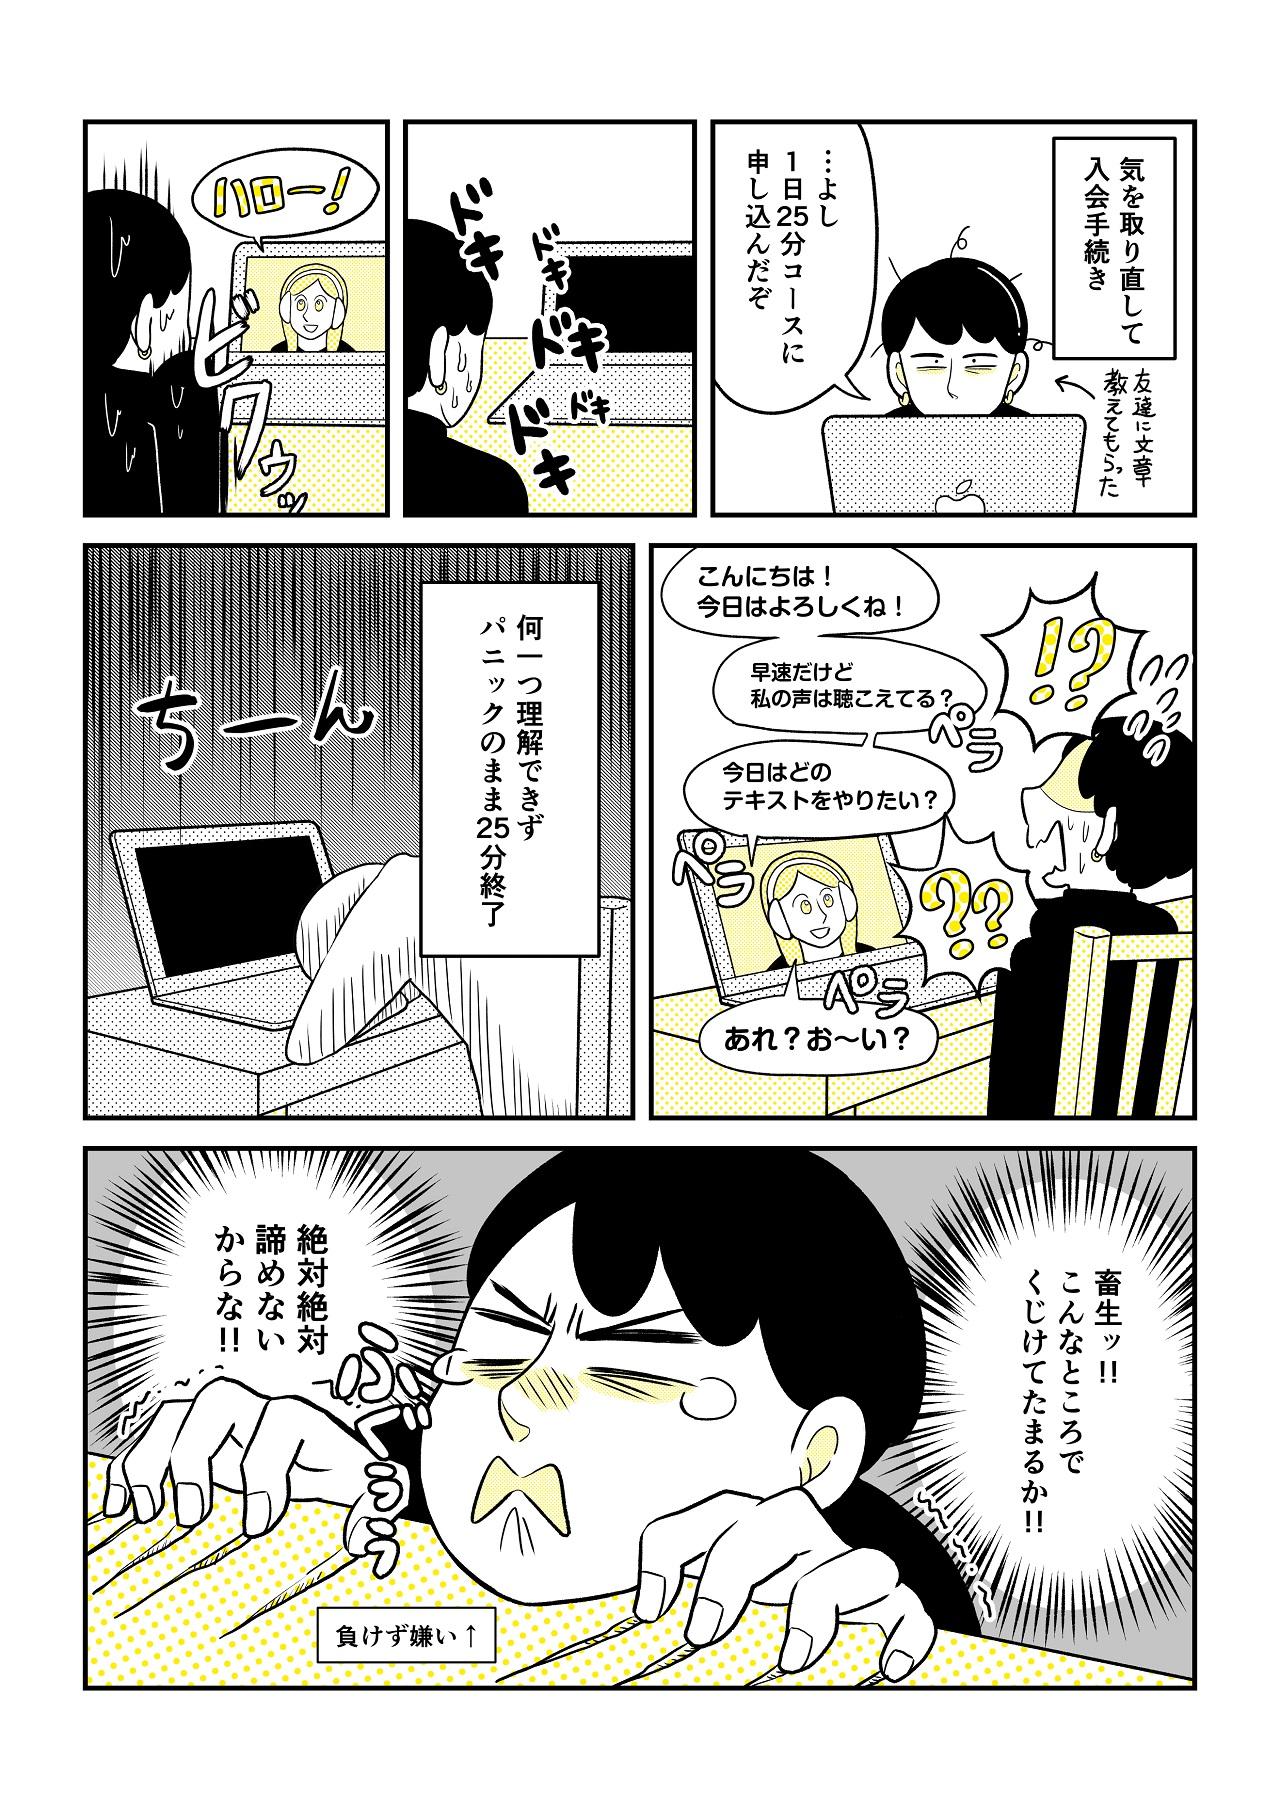 https://www.ryugaku.co.jp/column/images/04_06_1280.jpg